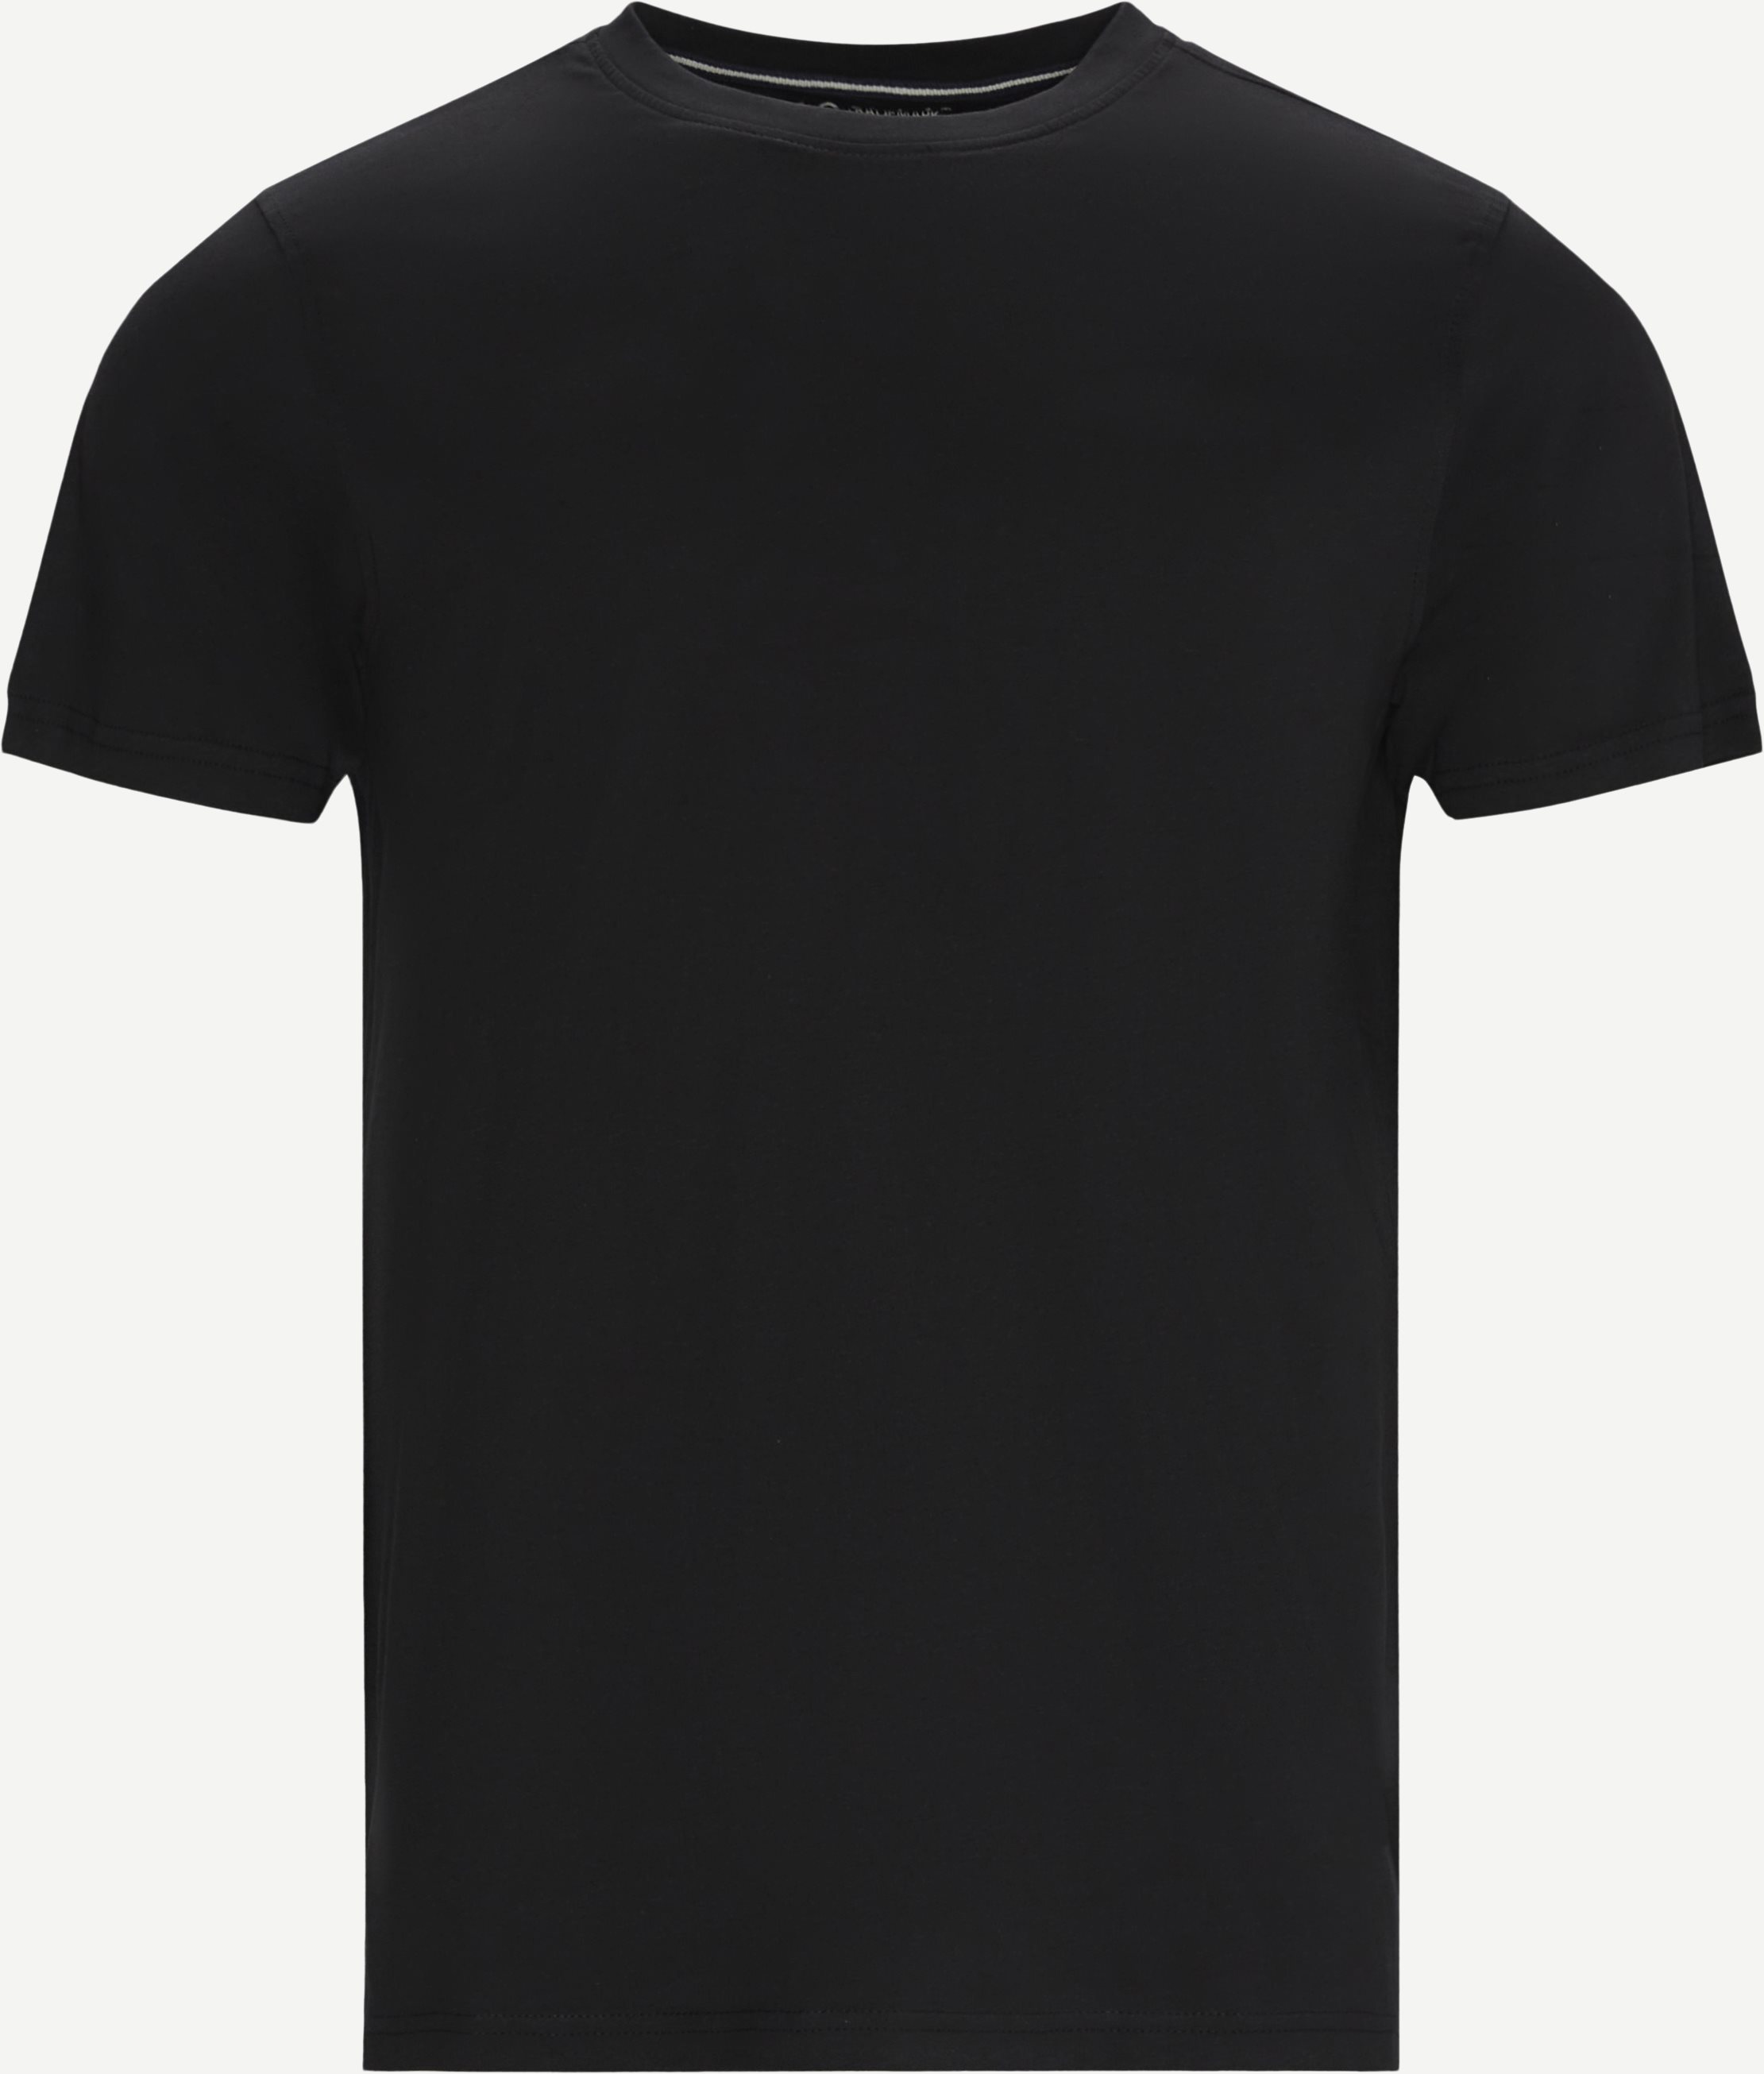 Wayne T-shirt - T-shirts - Regular fit - Sort